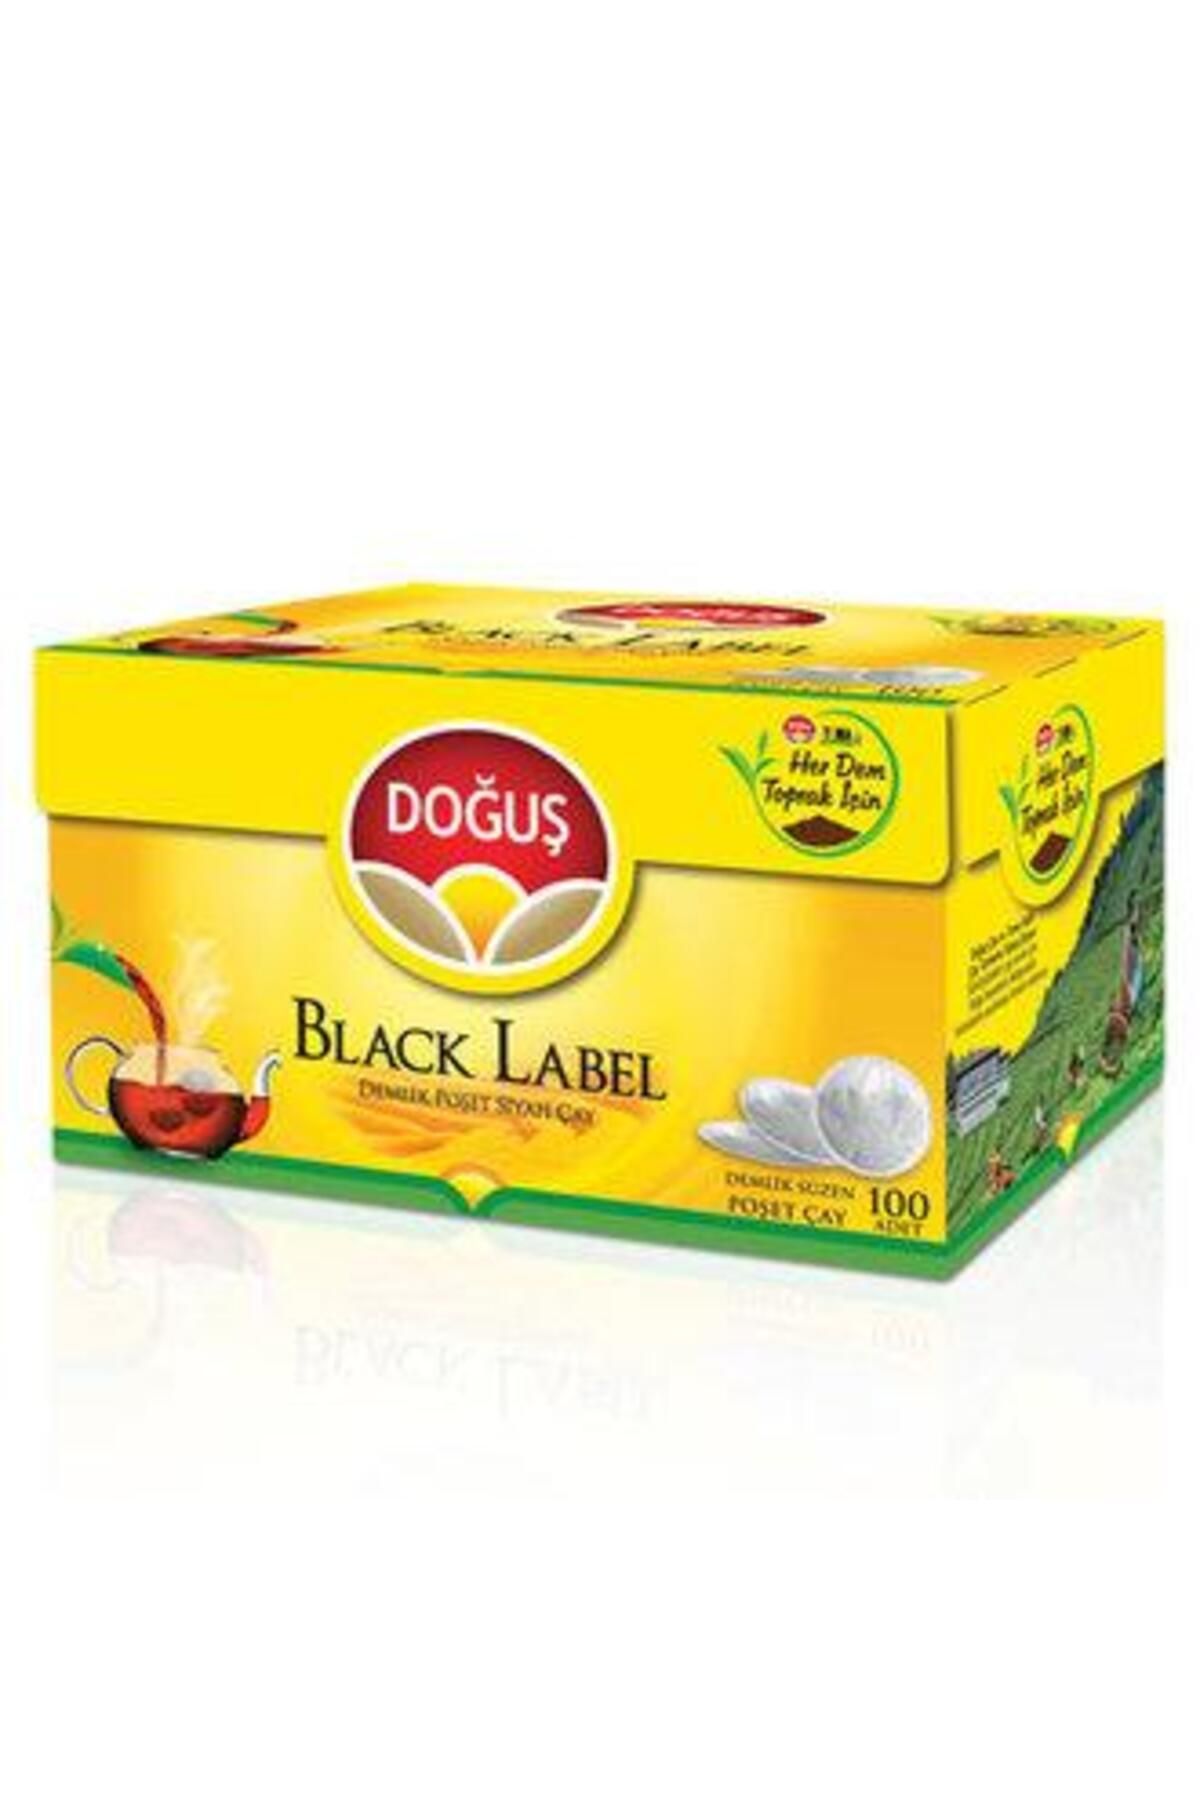 Doğuş Çay Doğuş Black Label Demlik 100'lü 320 Gr. (2'Lİ)